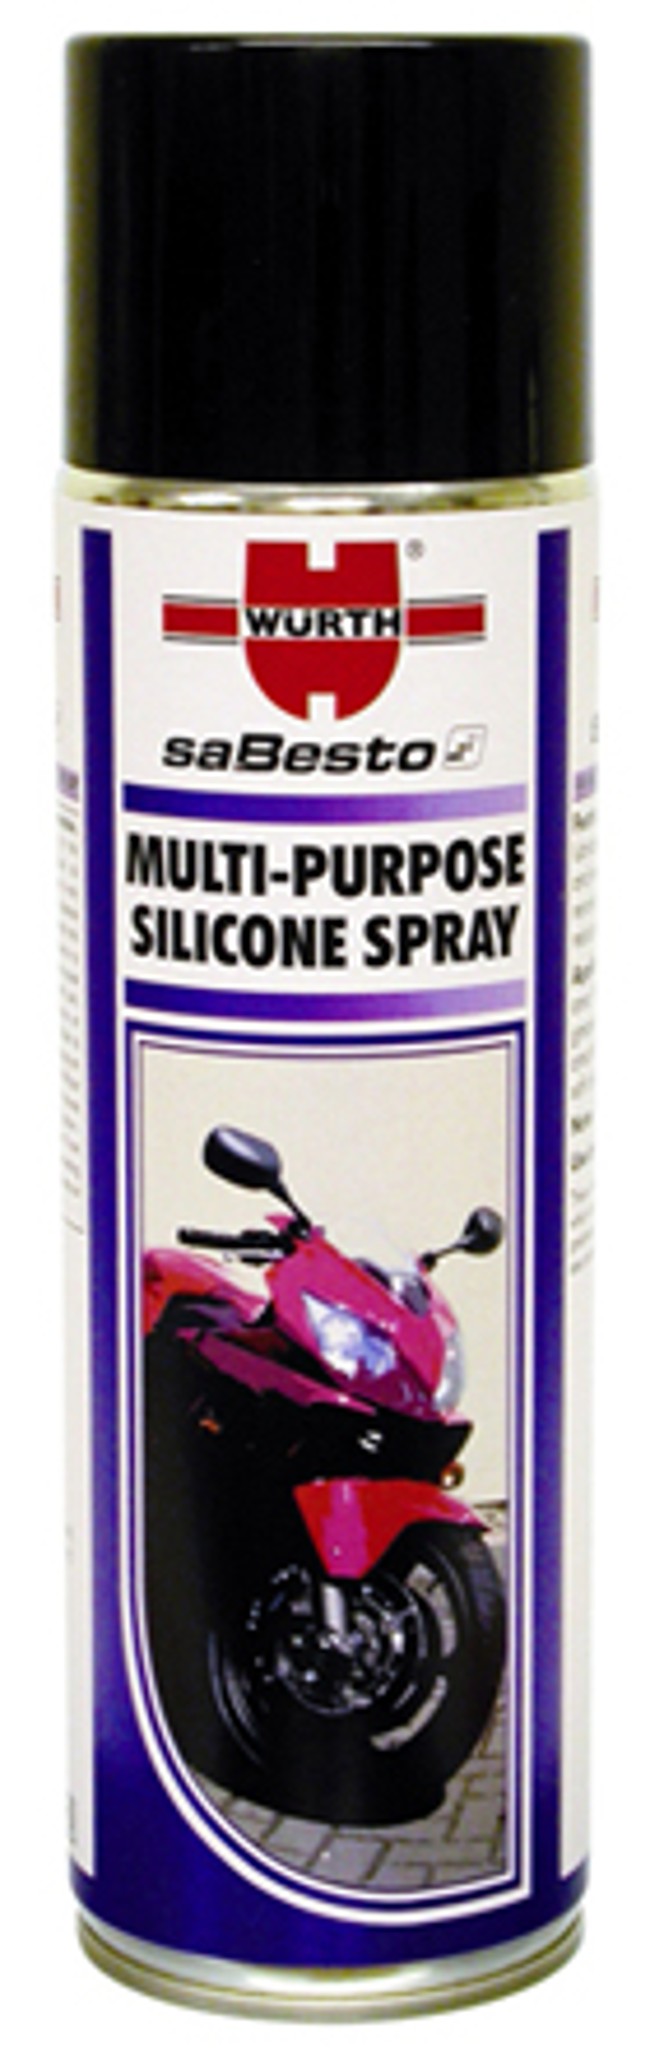 Würth motorcycle multi-purpose silicone spray 500ml